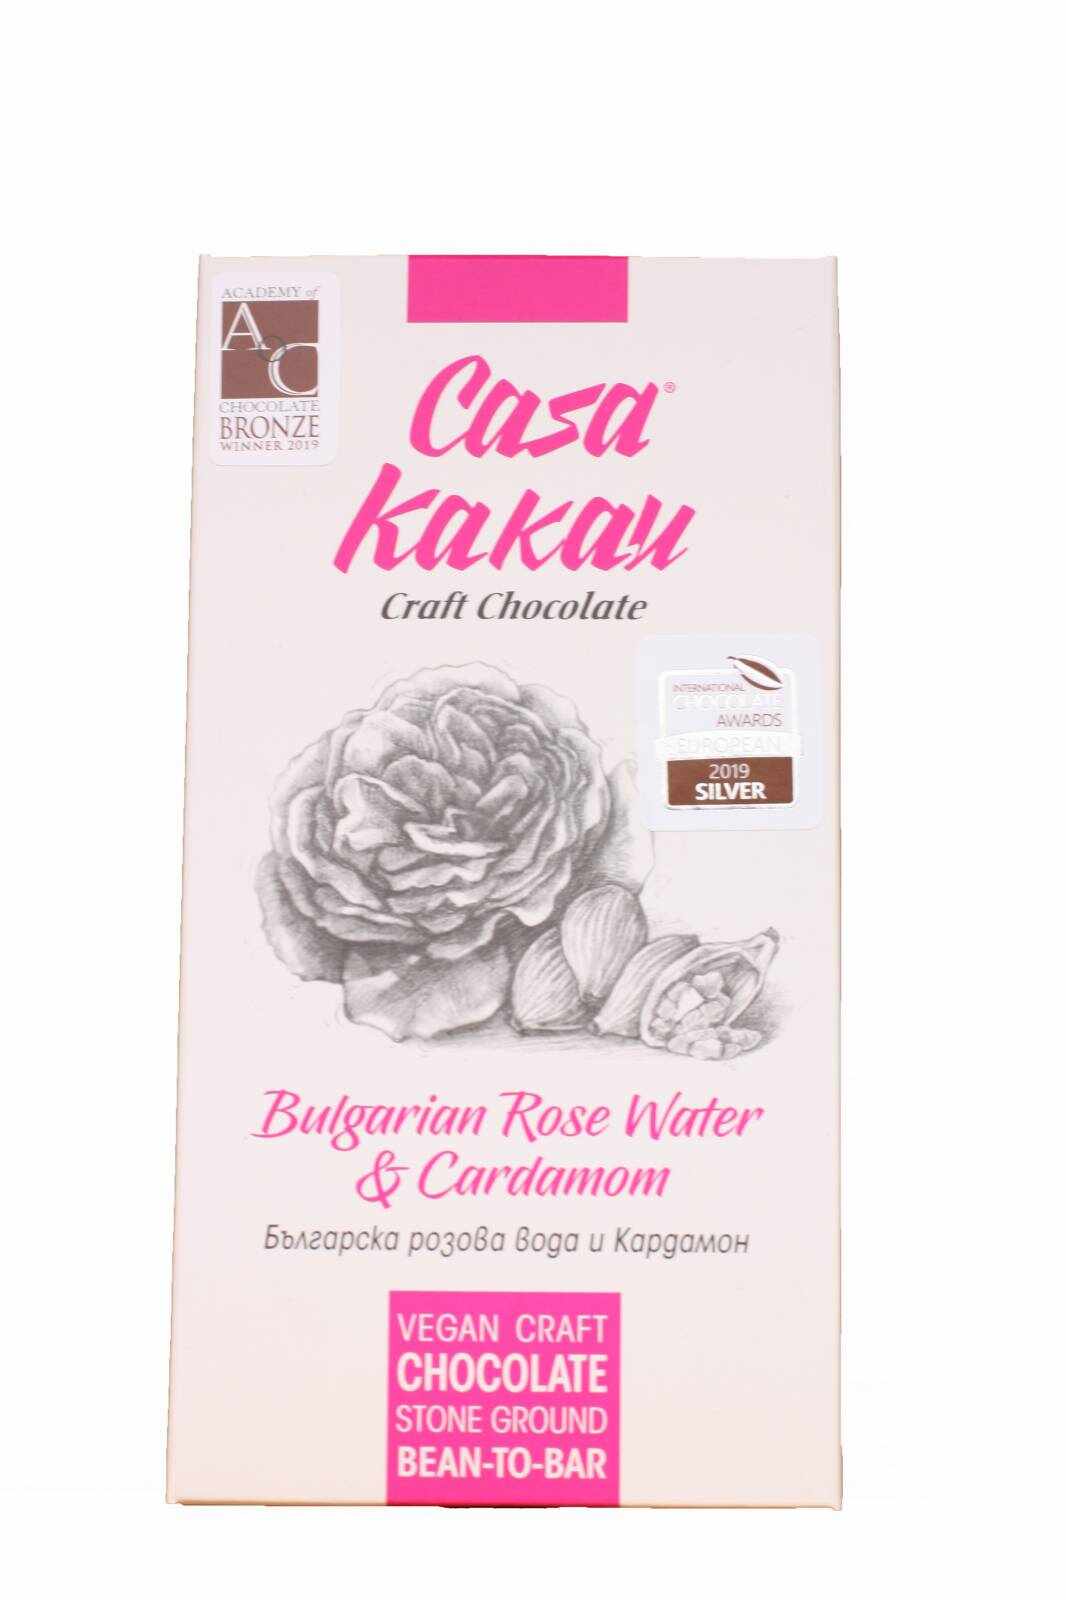 Ciocolata vegana cu apa de trandafir si cardamom, 70g - Casa Kakau